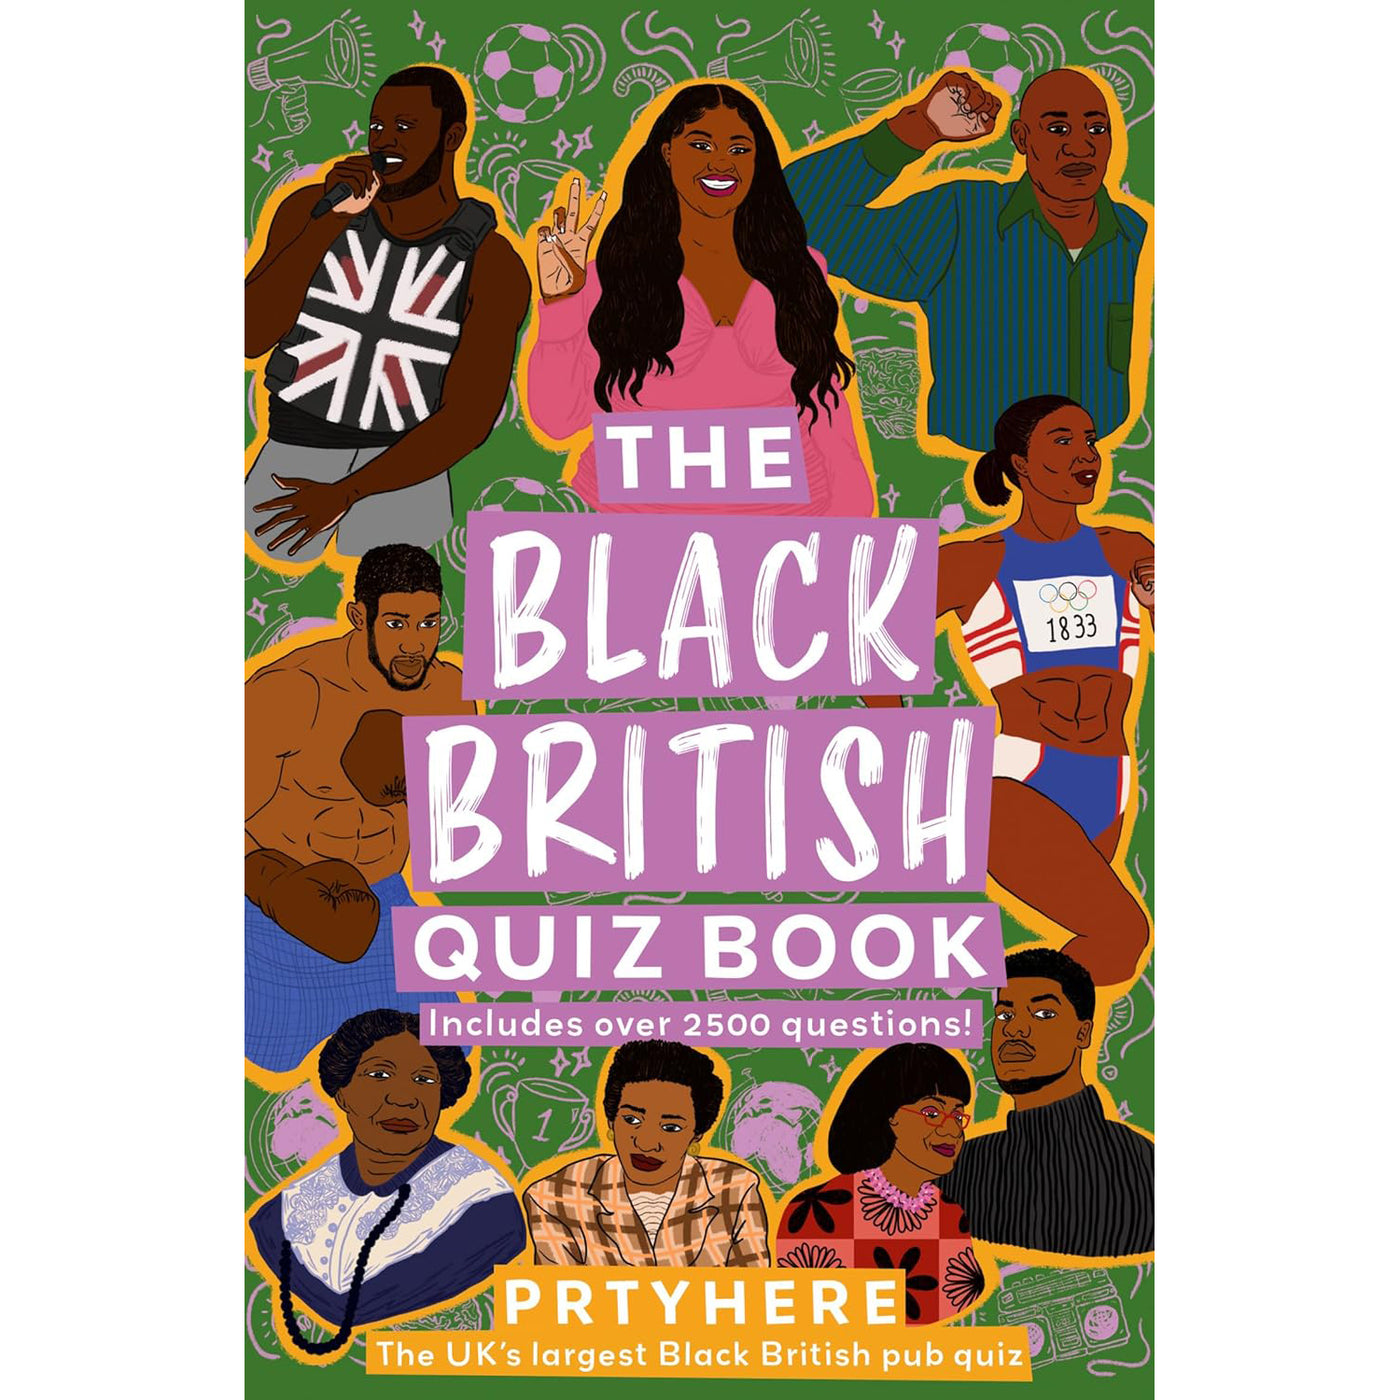 The Black British Quiz Book by Prtyhere